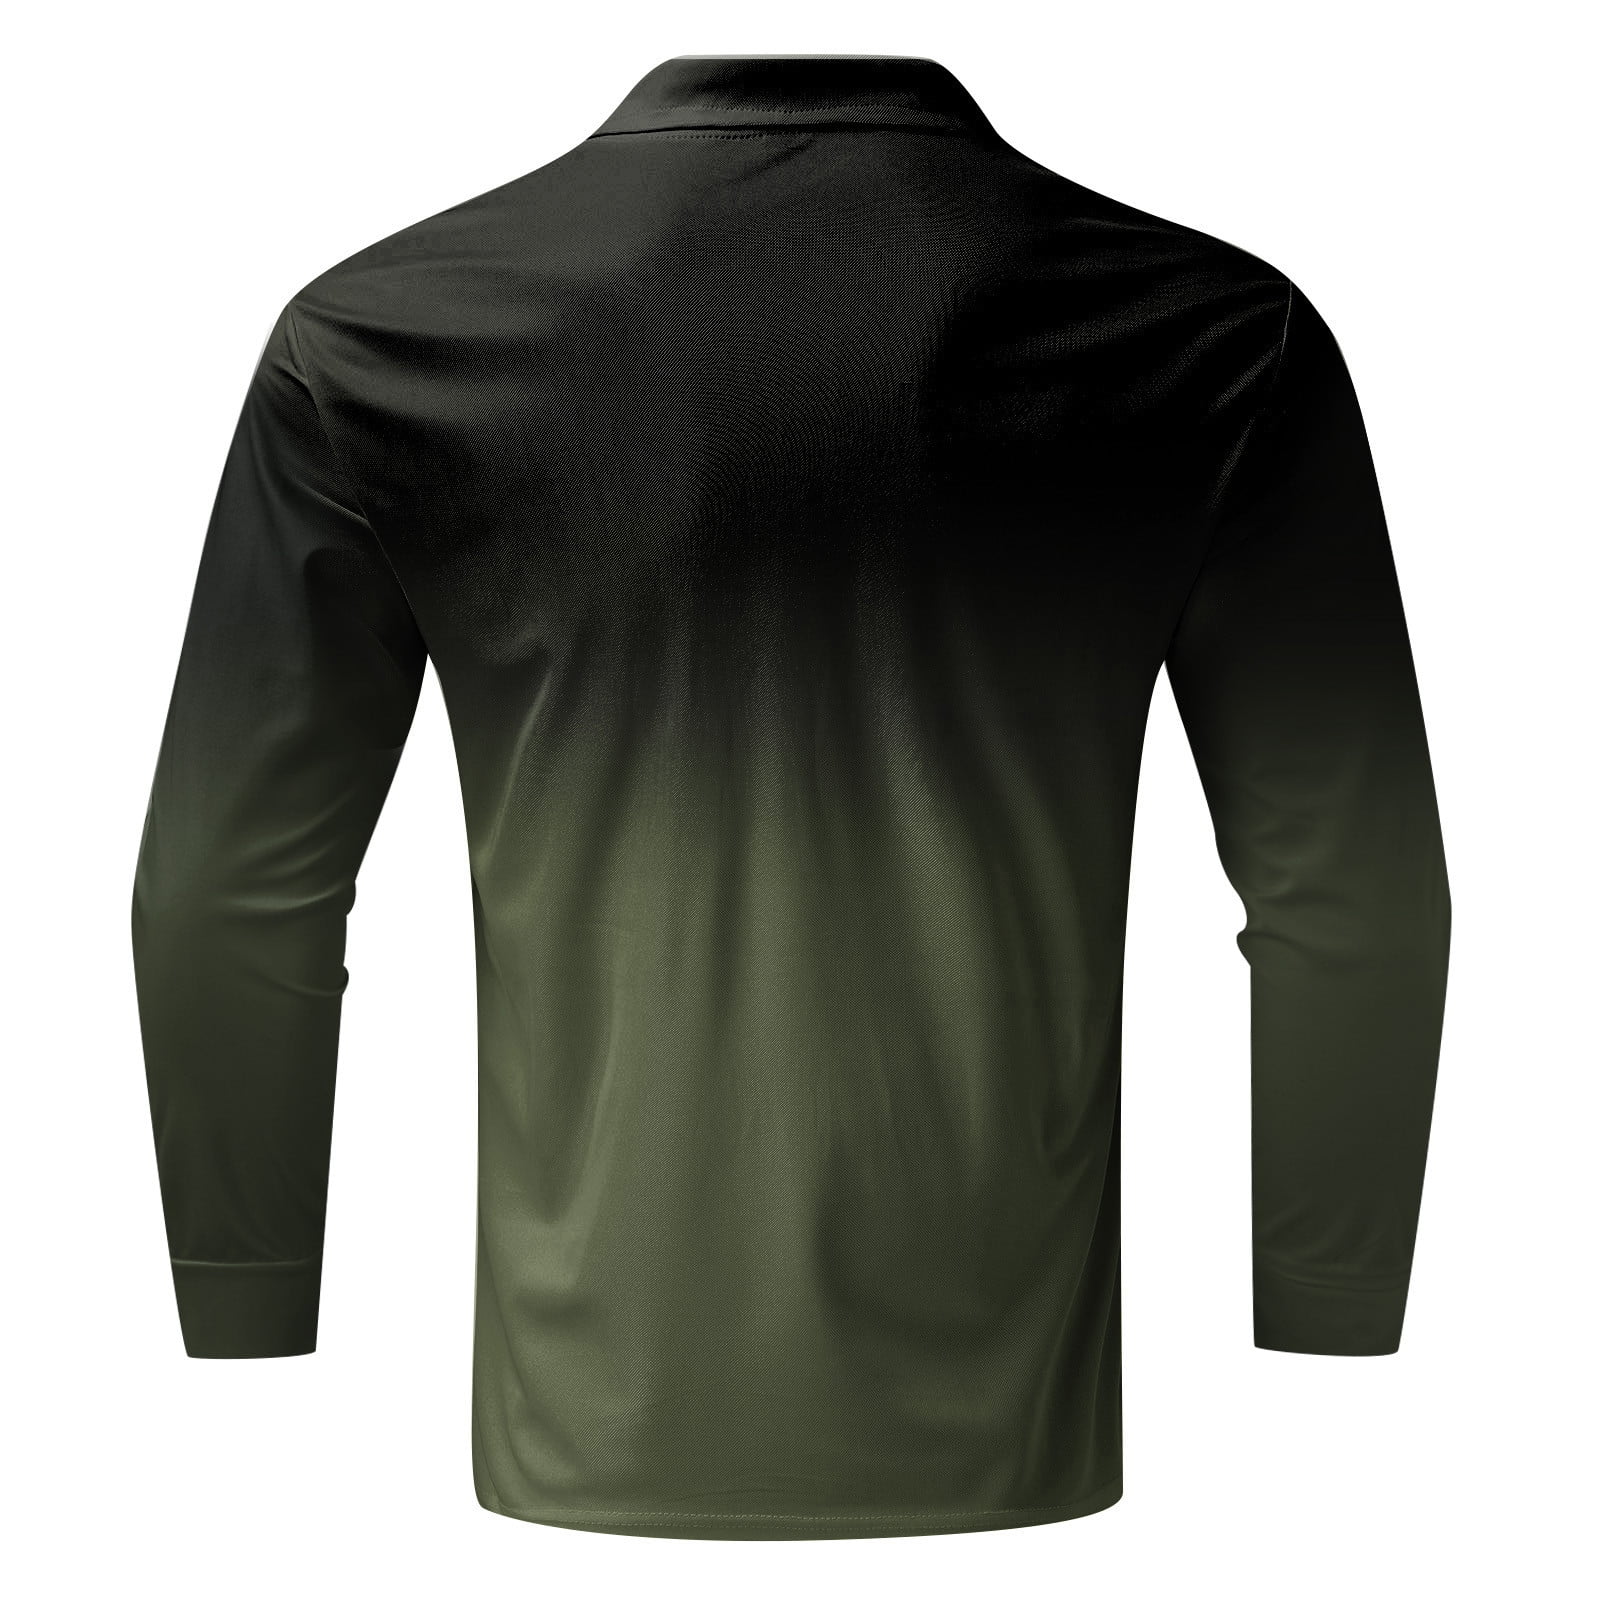 Men's Sport's & Ceicket Jersey Full Sleeve t-shirt